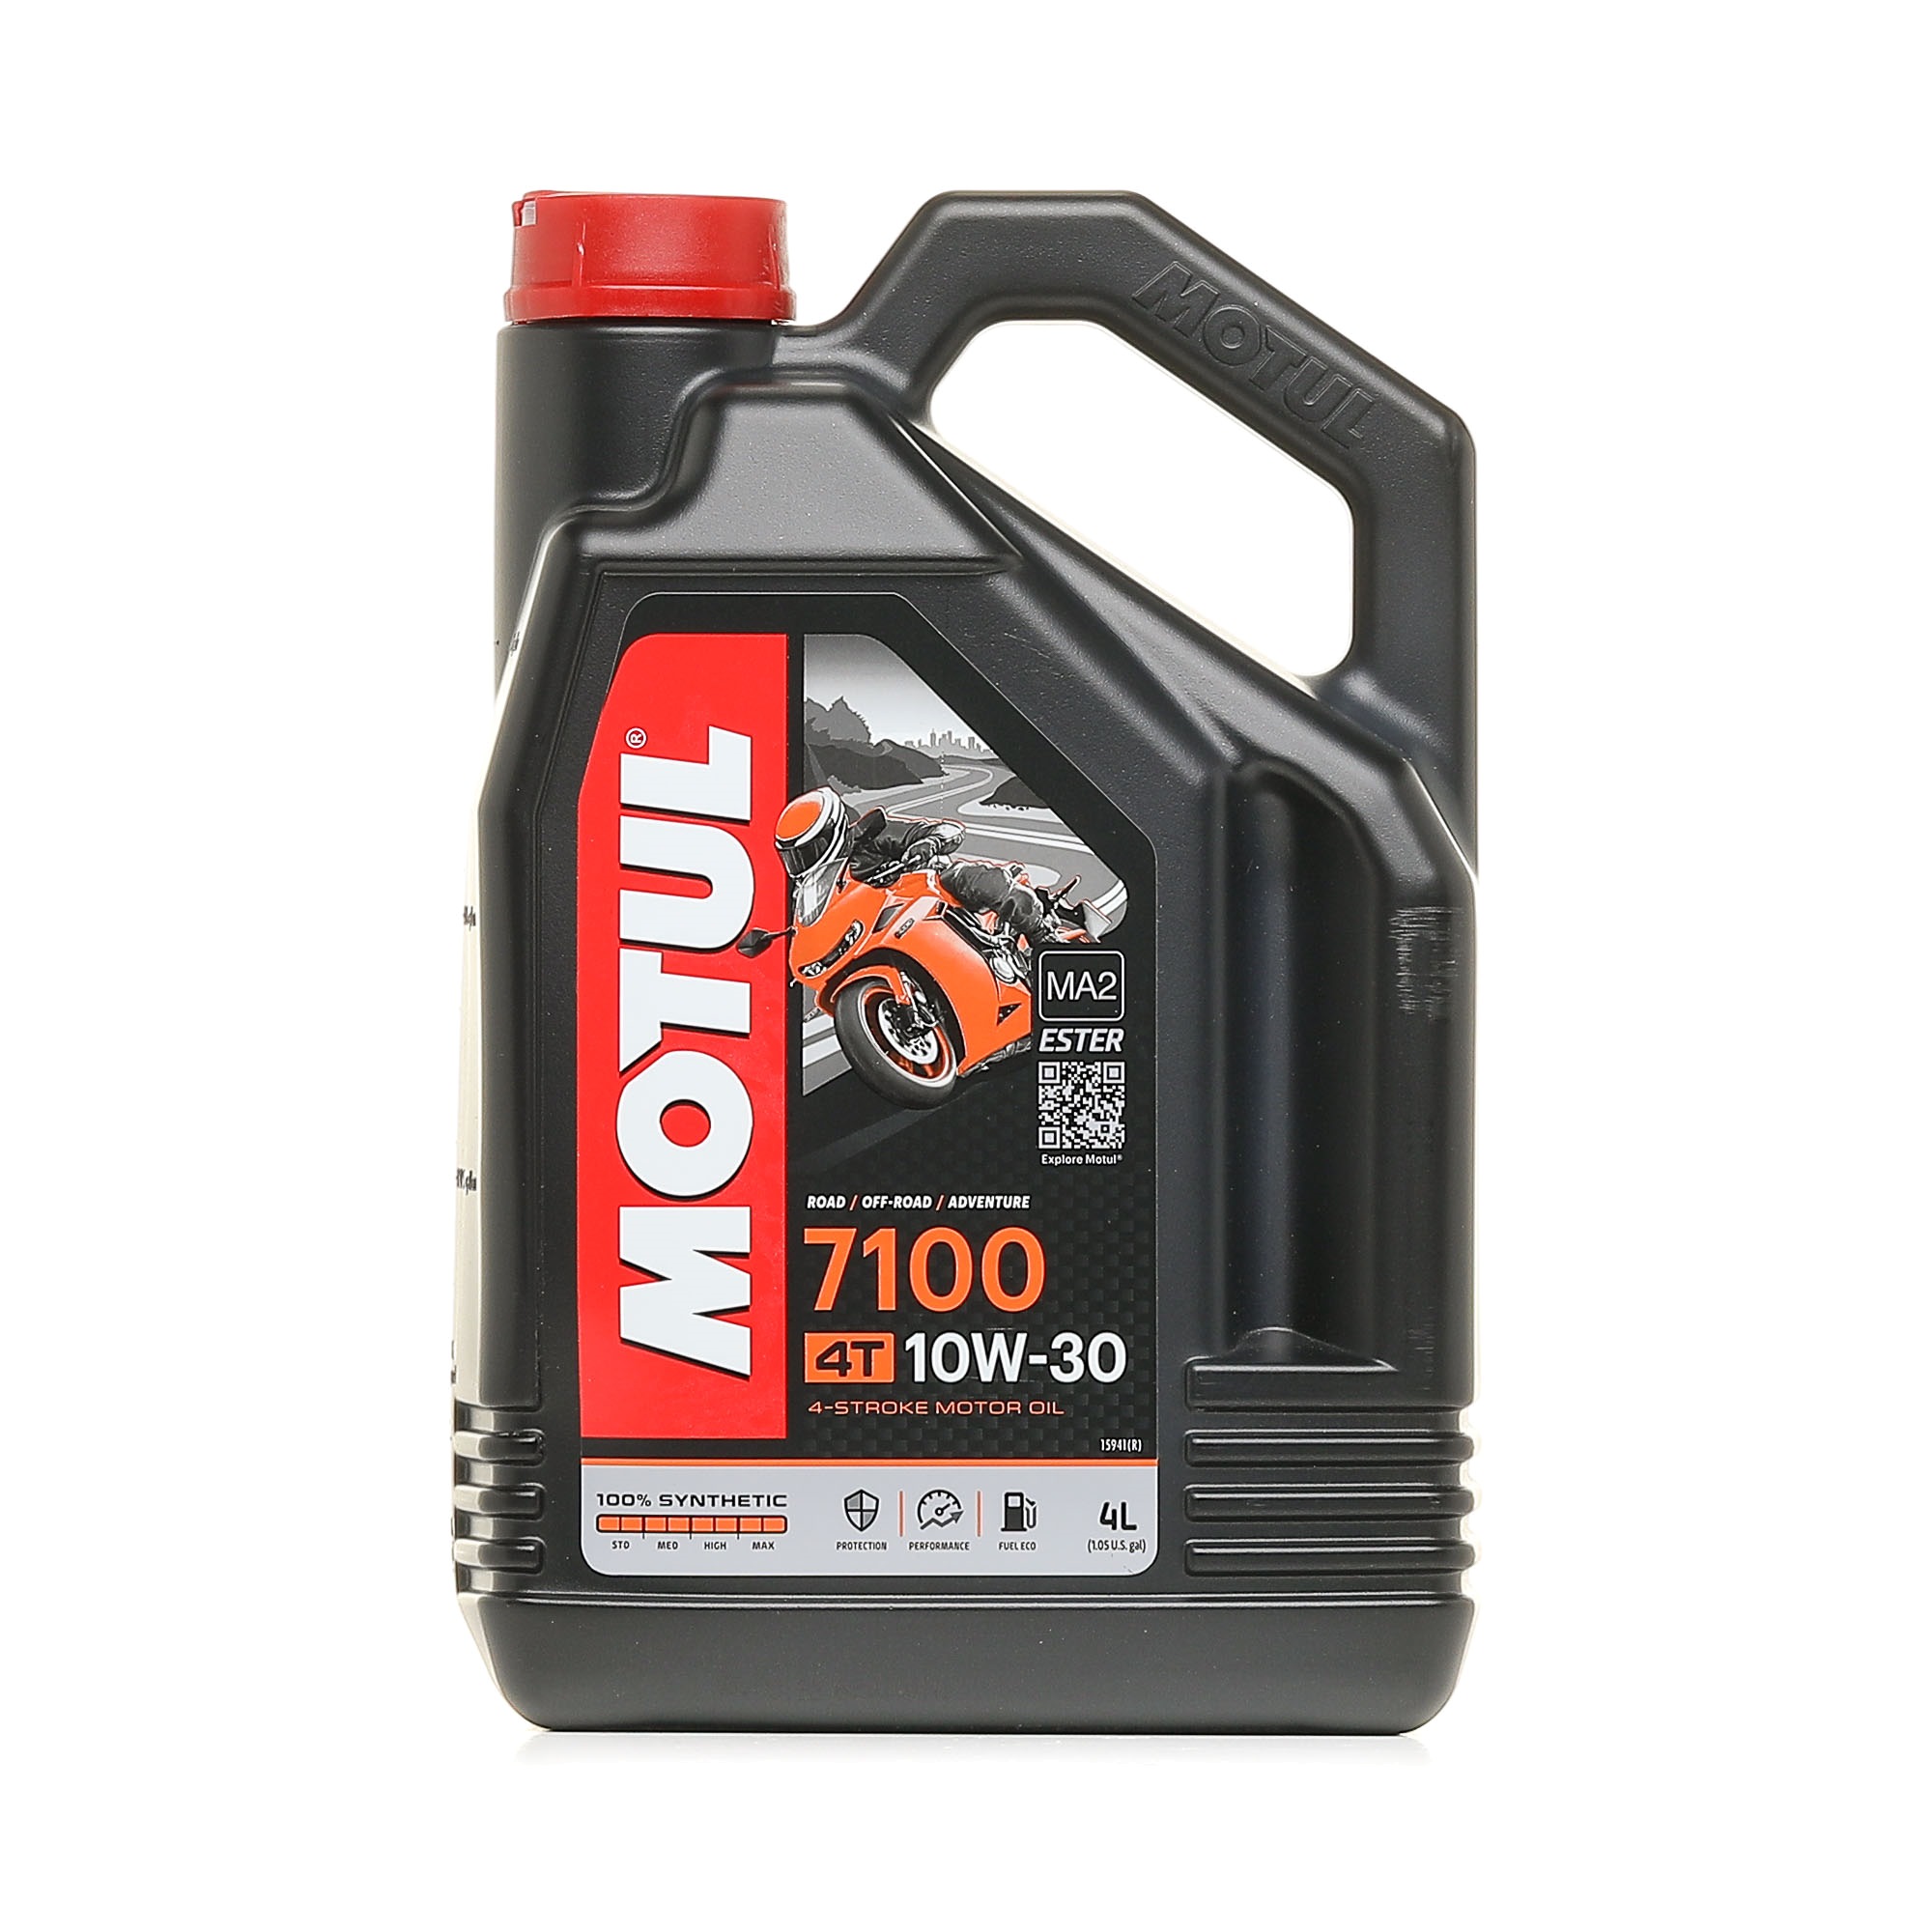 Car oil API SG MOTUL - 104090 4T